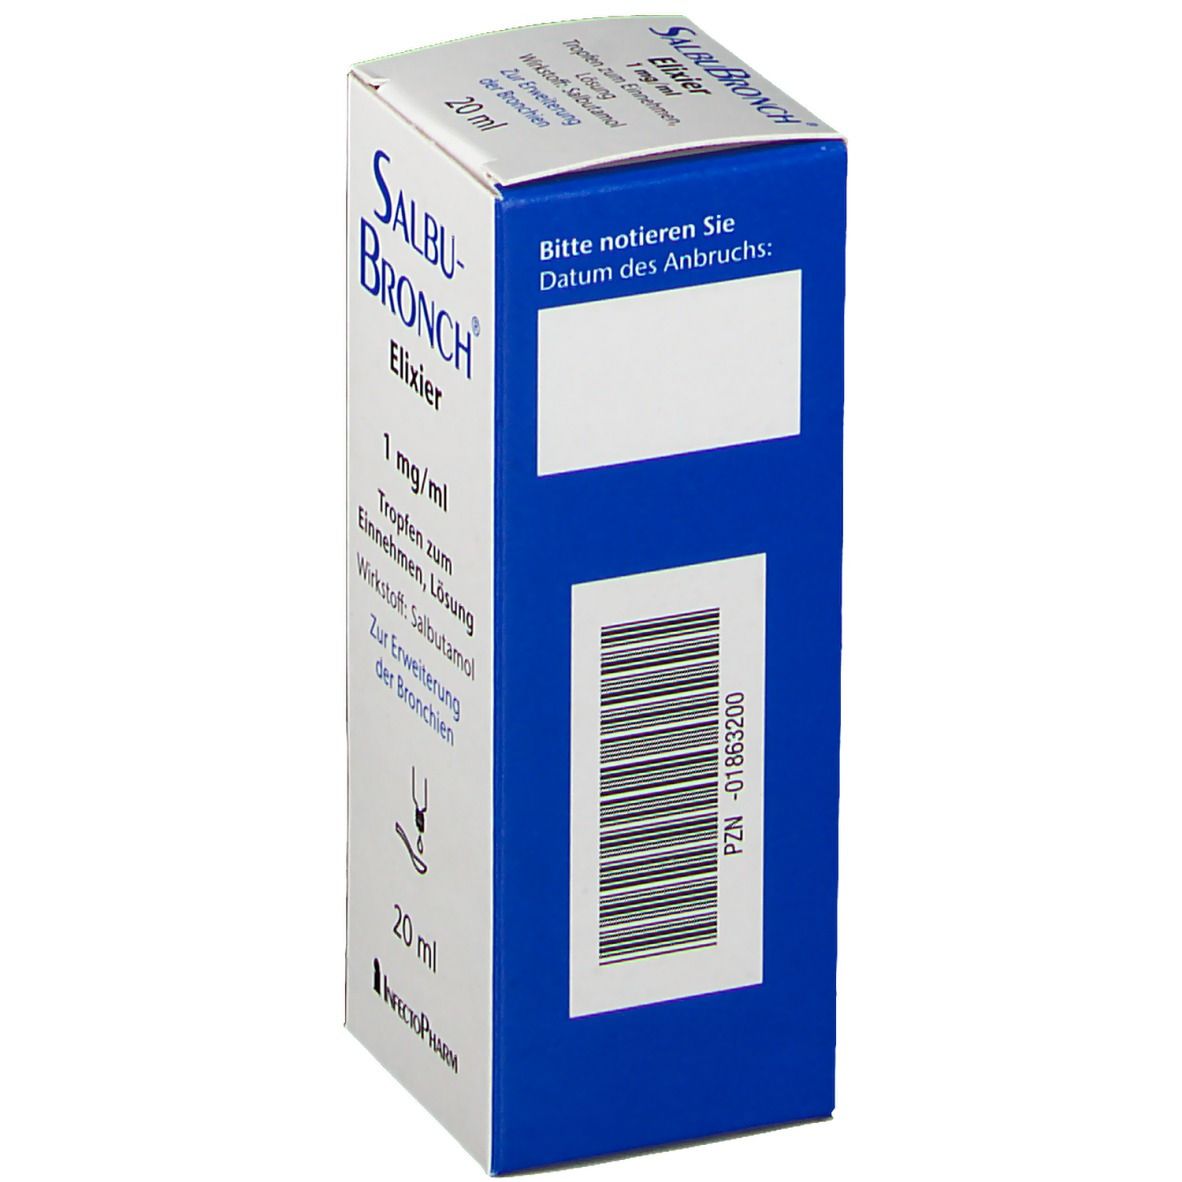 SalbuBronch® Elixier 1 mg/ml